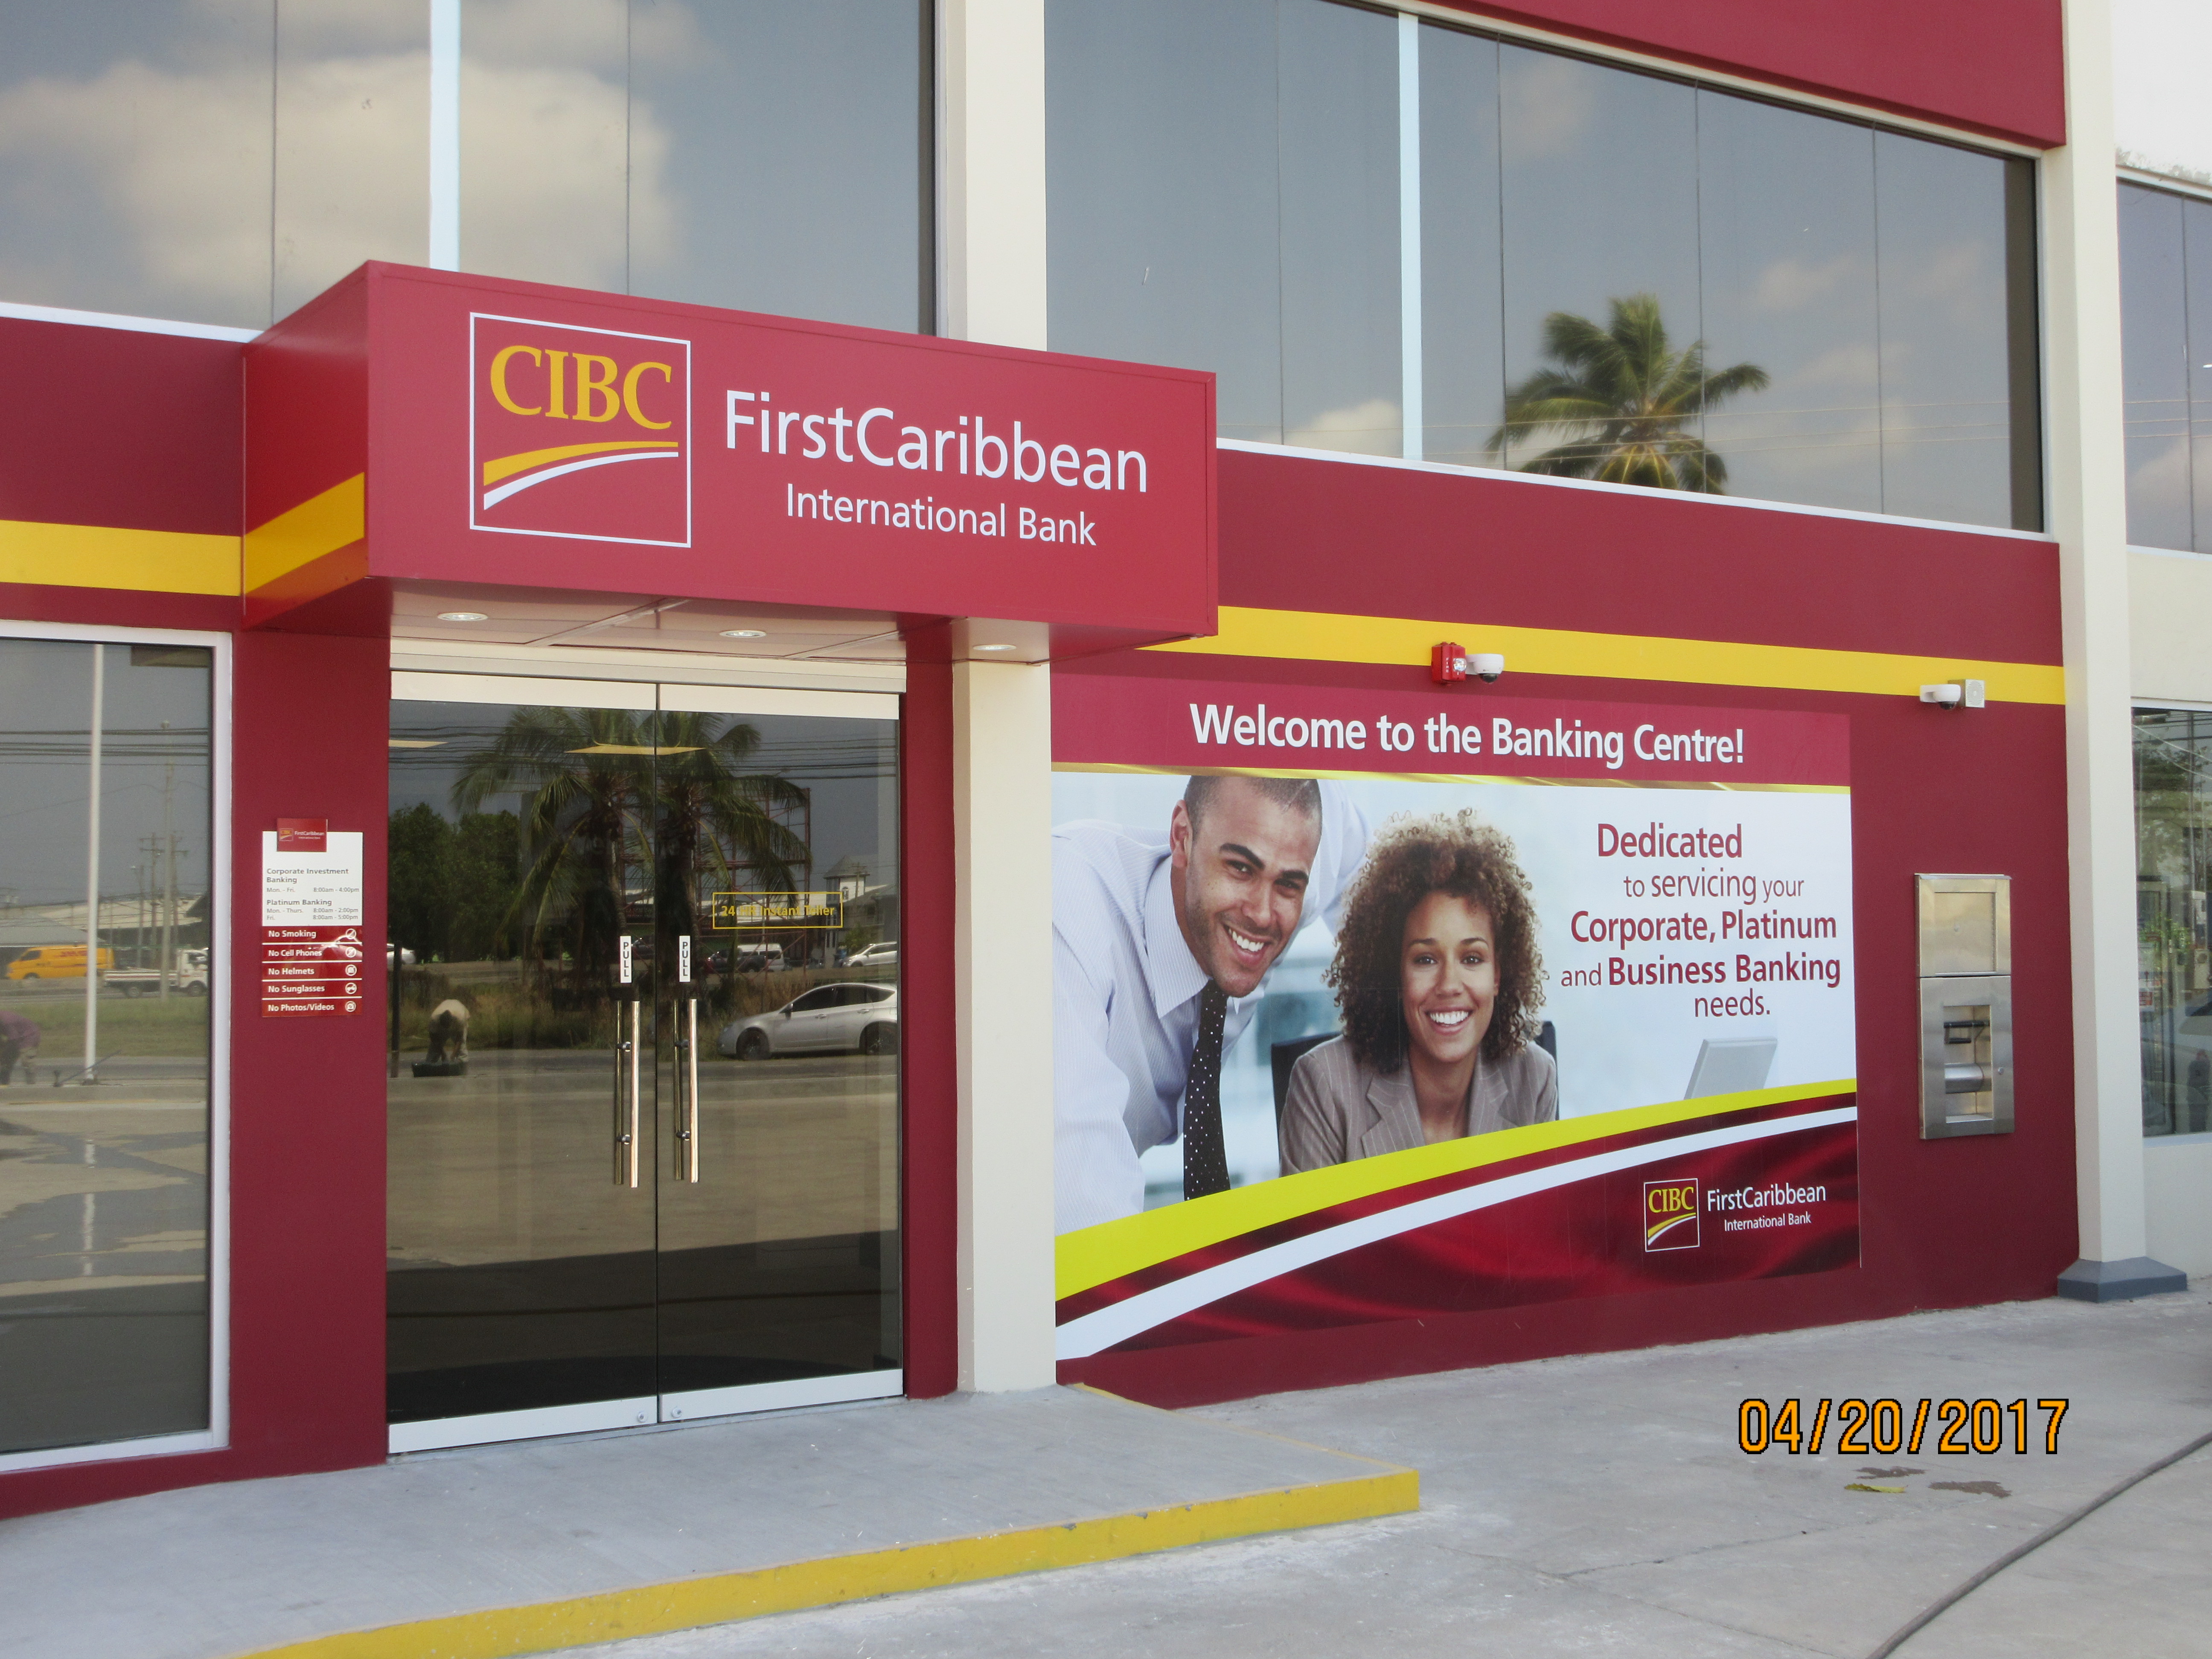 CIBC First Caribbean International Bank